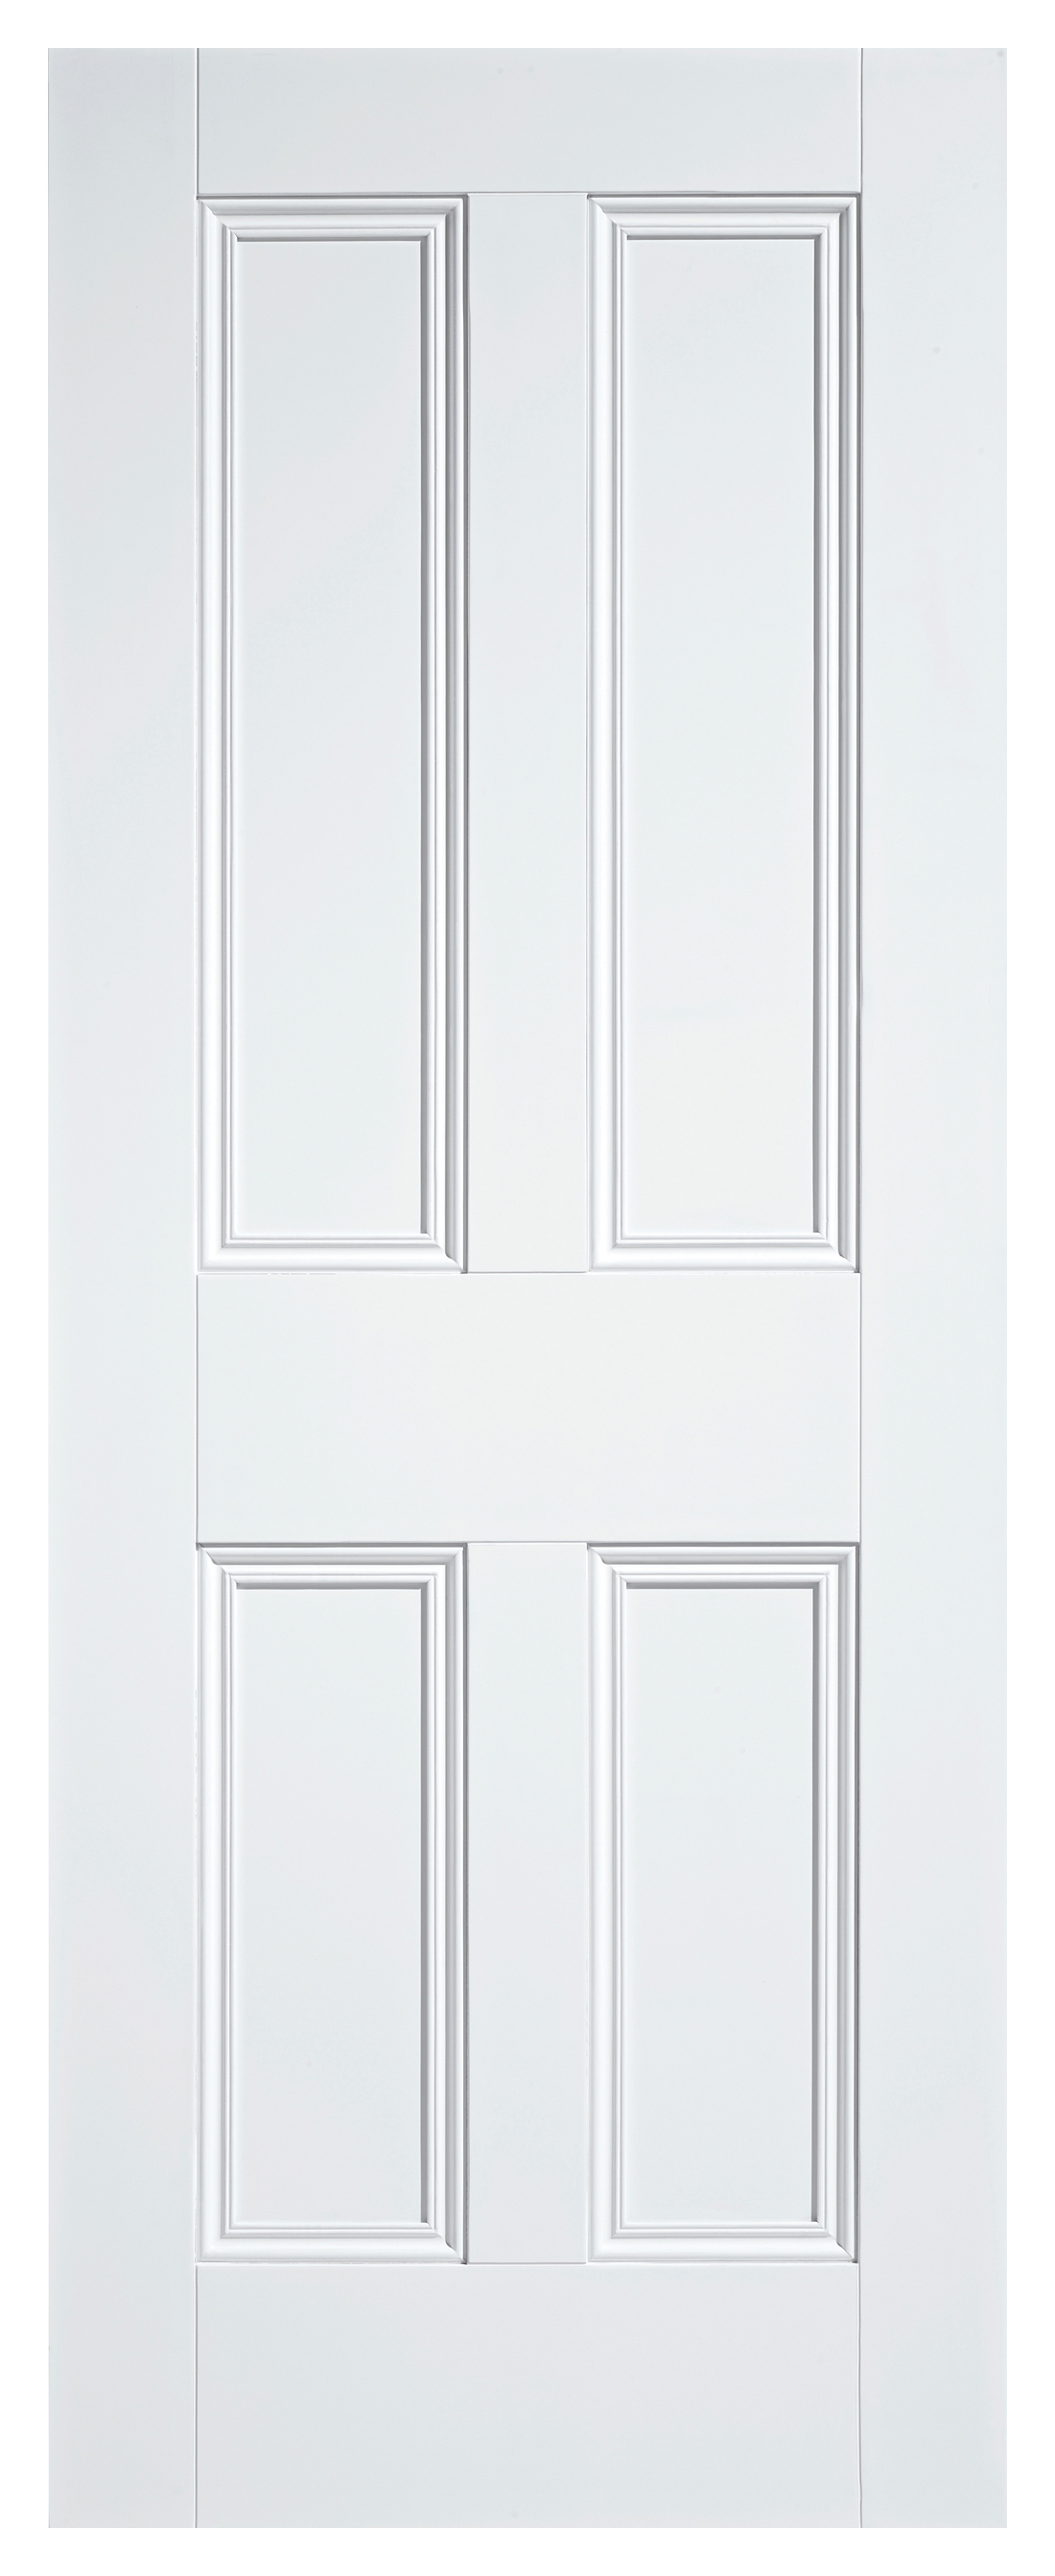 Image of LPD Internal 4 Panel Primed White Solid Core Door - 686 x 1981mm